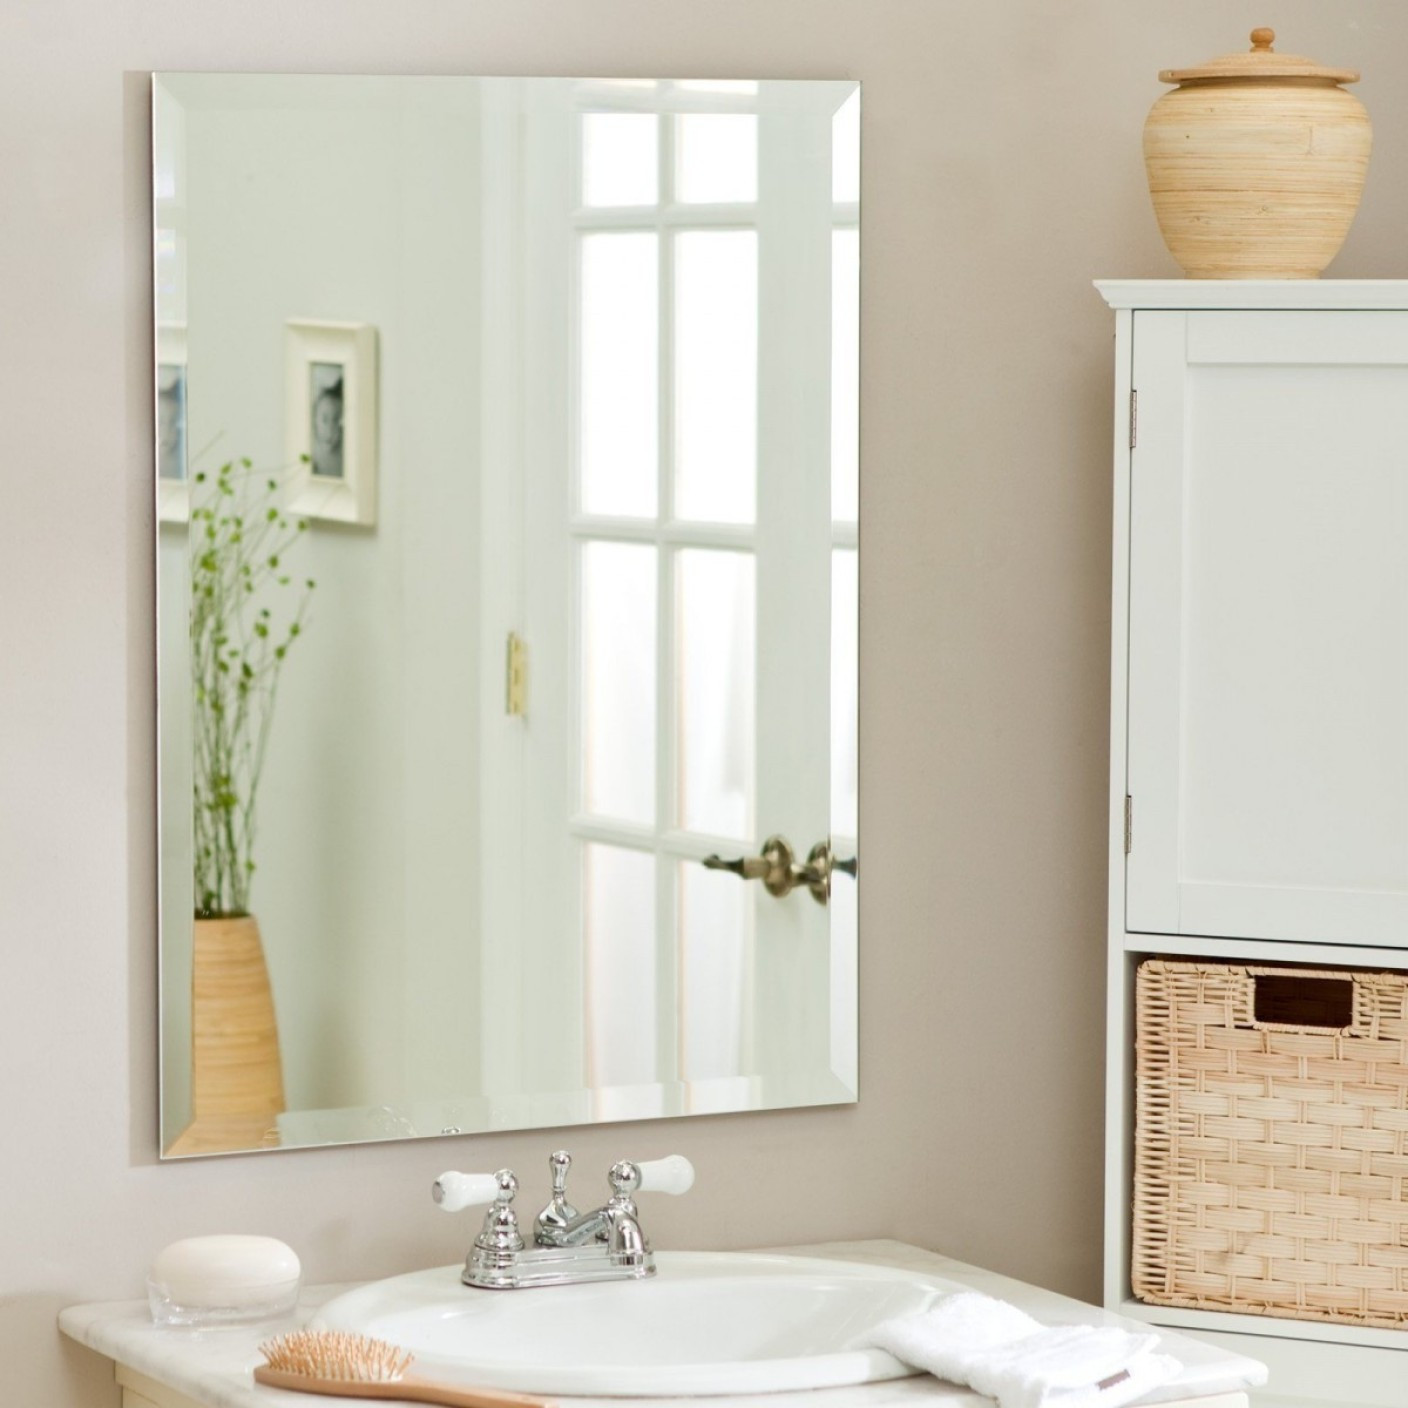 Buy Bathroom Mirror
 SDG M 126 Bathroom Mirror Price in India Buy SDG M 126